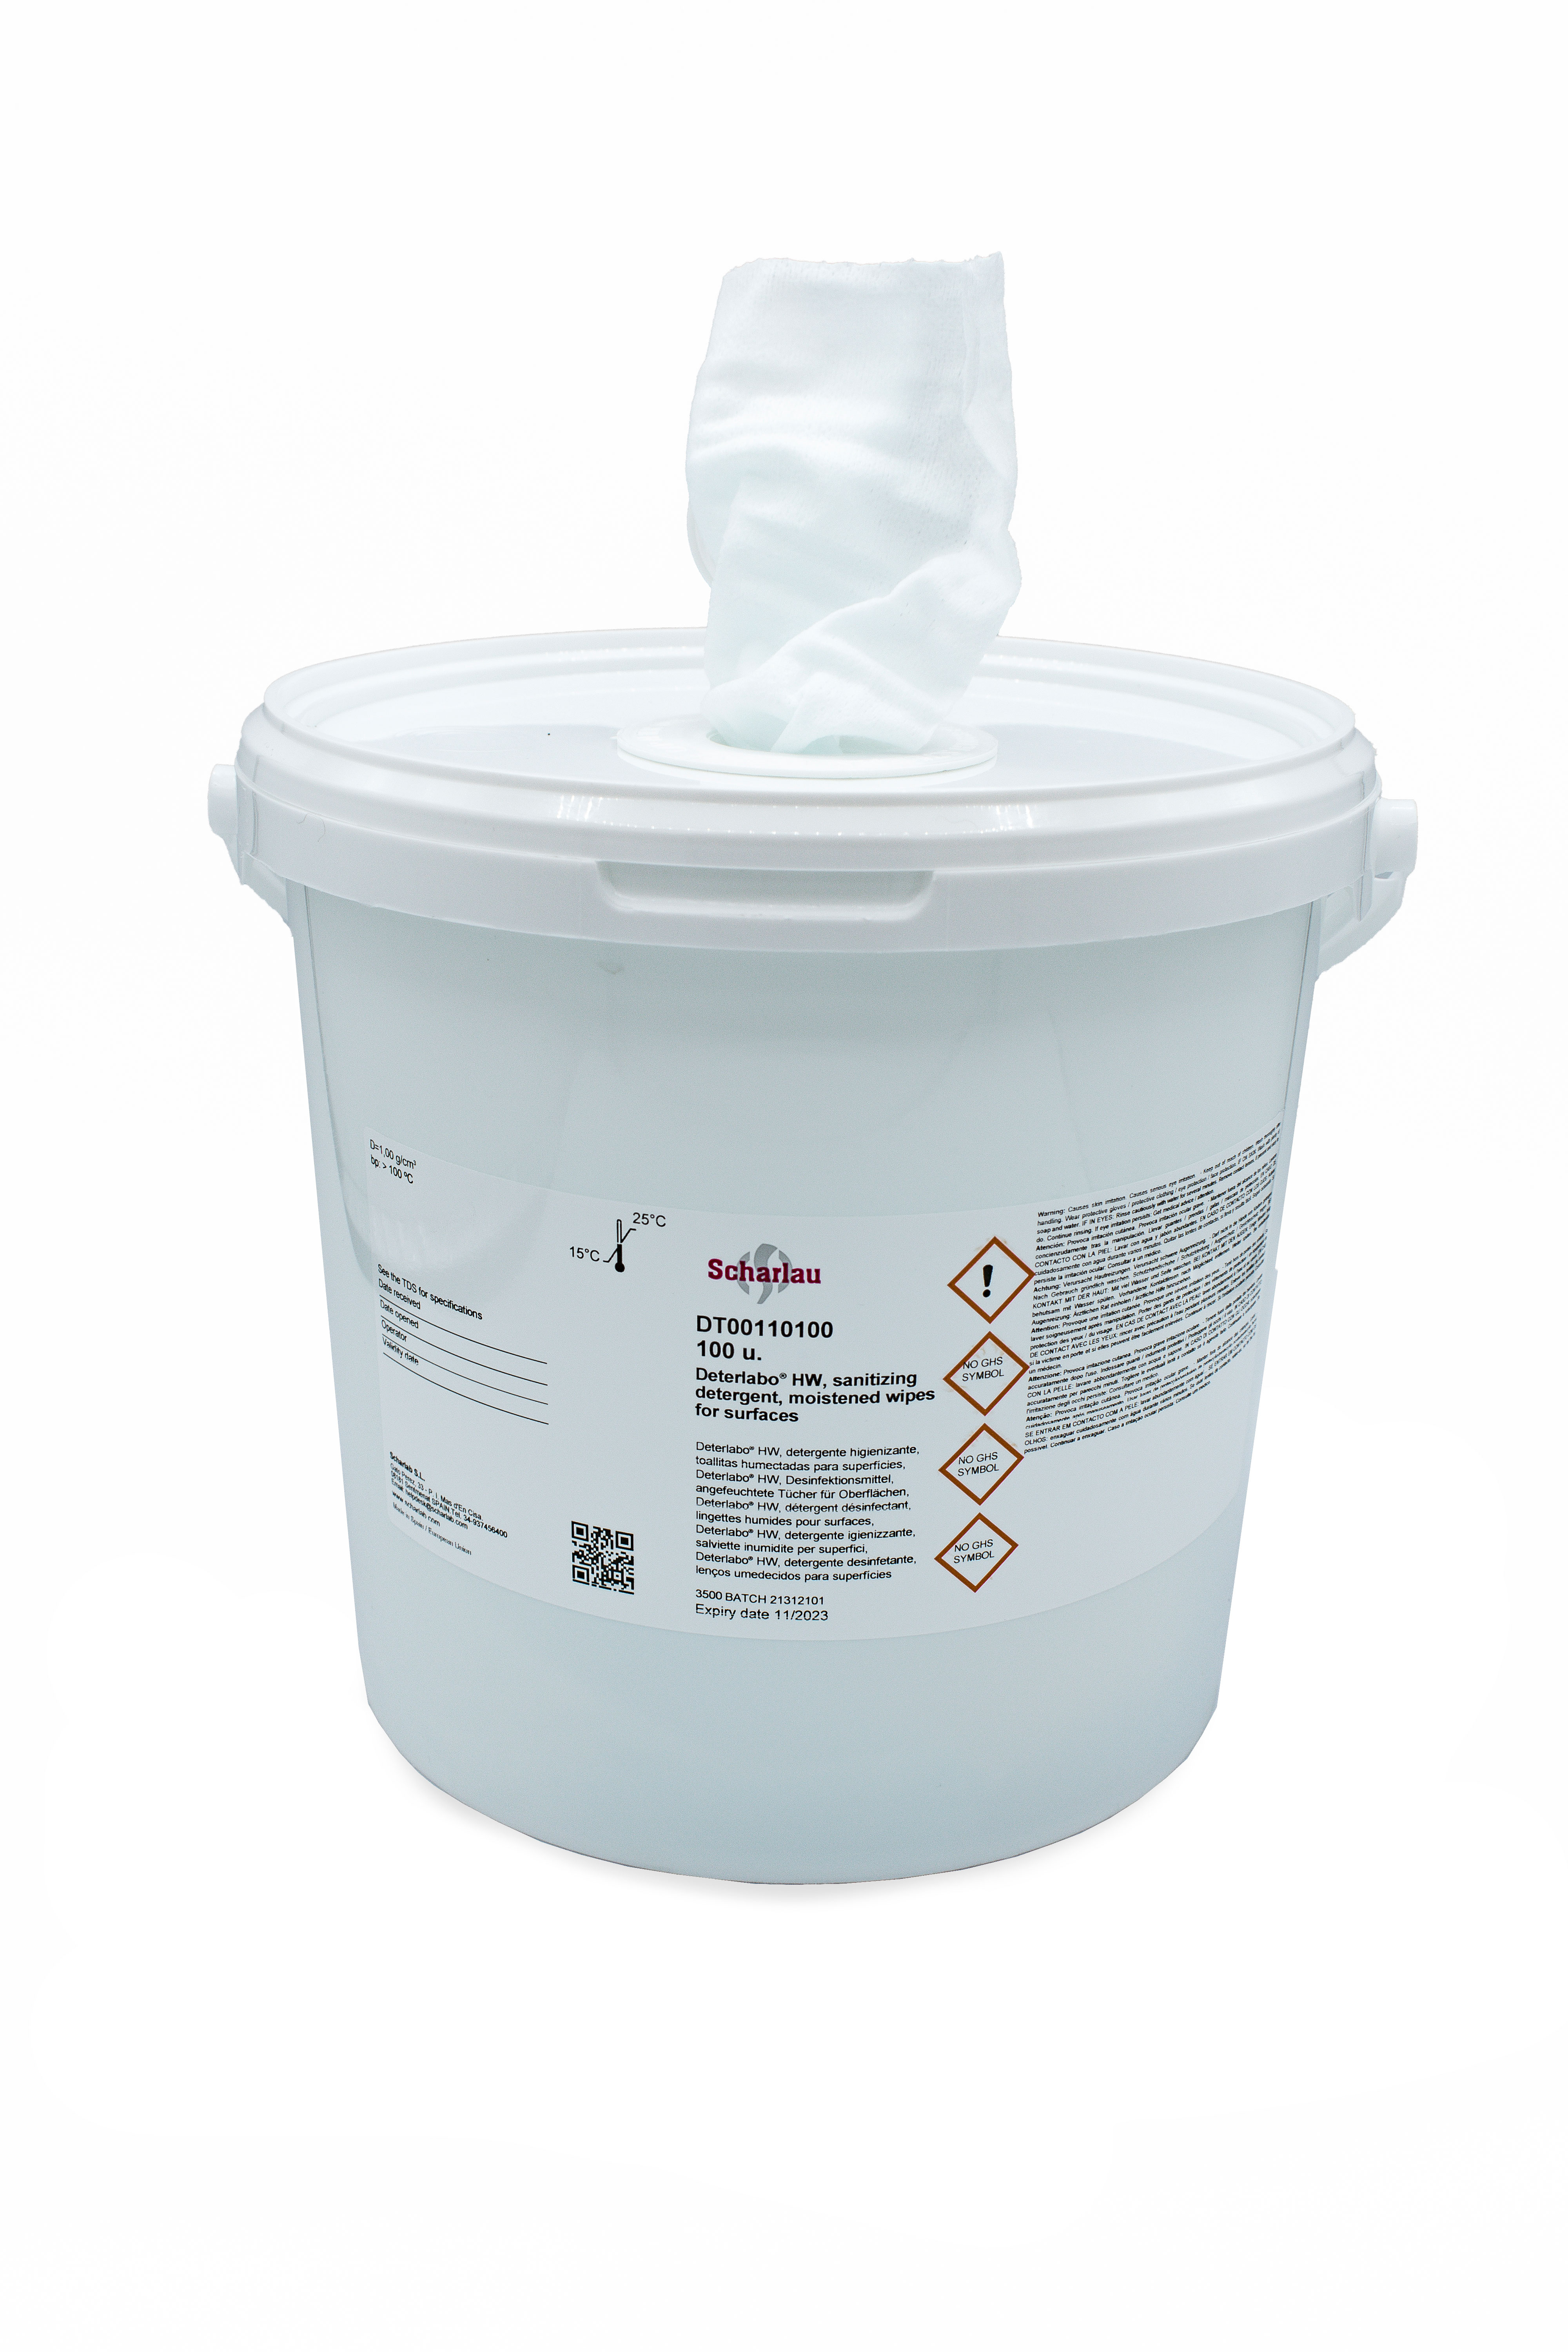 Sanitising detergent, impregnated wipes for surfaces, Deterlabo® HW